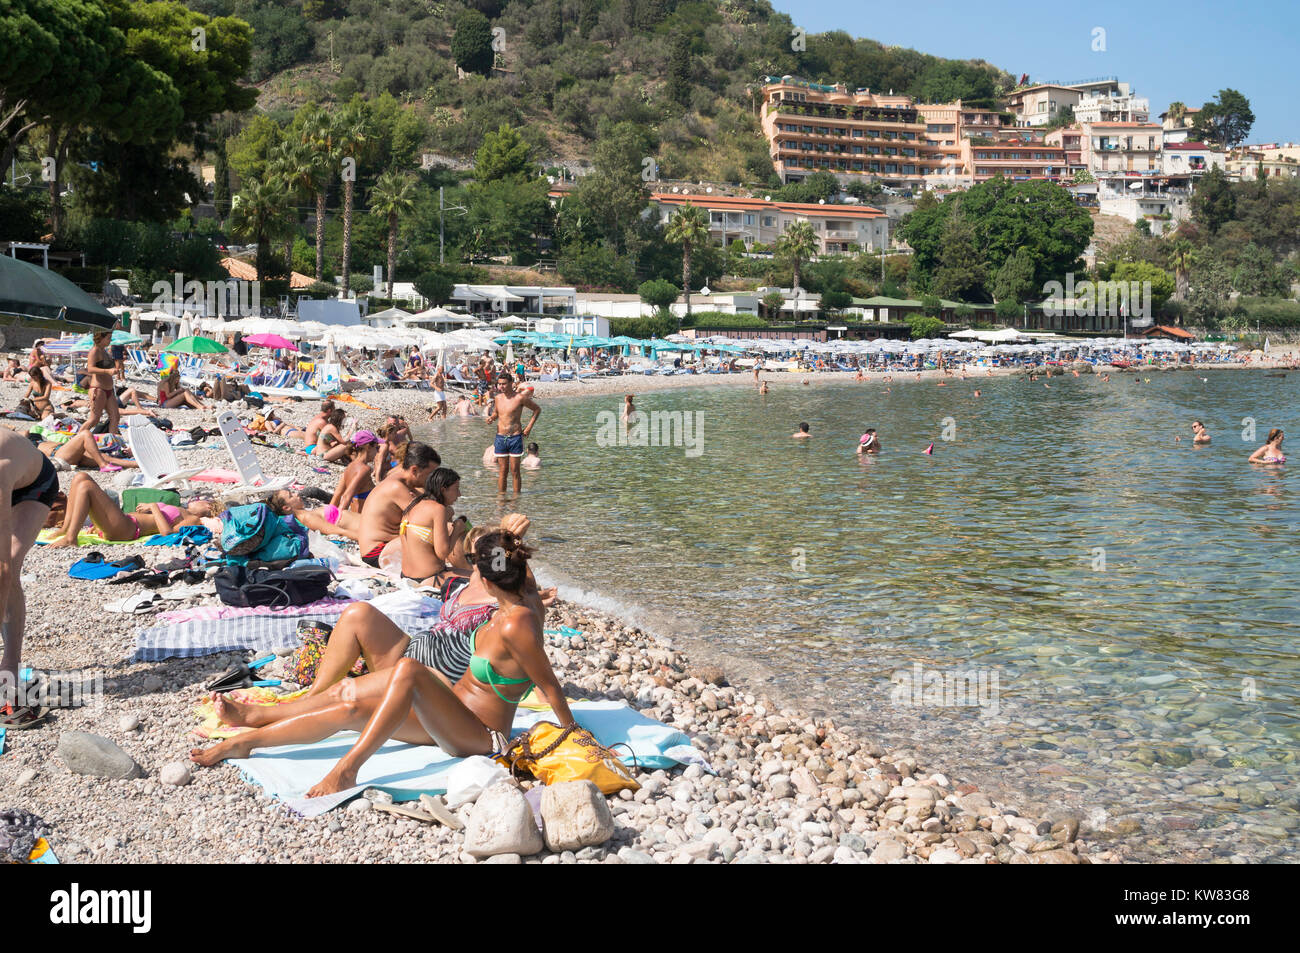 People sunbathing on the beach at Mazzarò, Taormina, Sicily Stock Photo